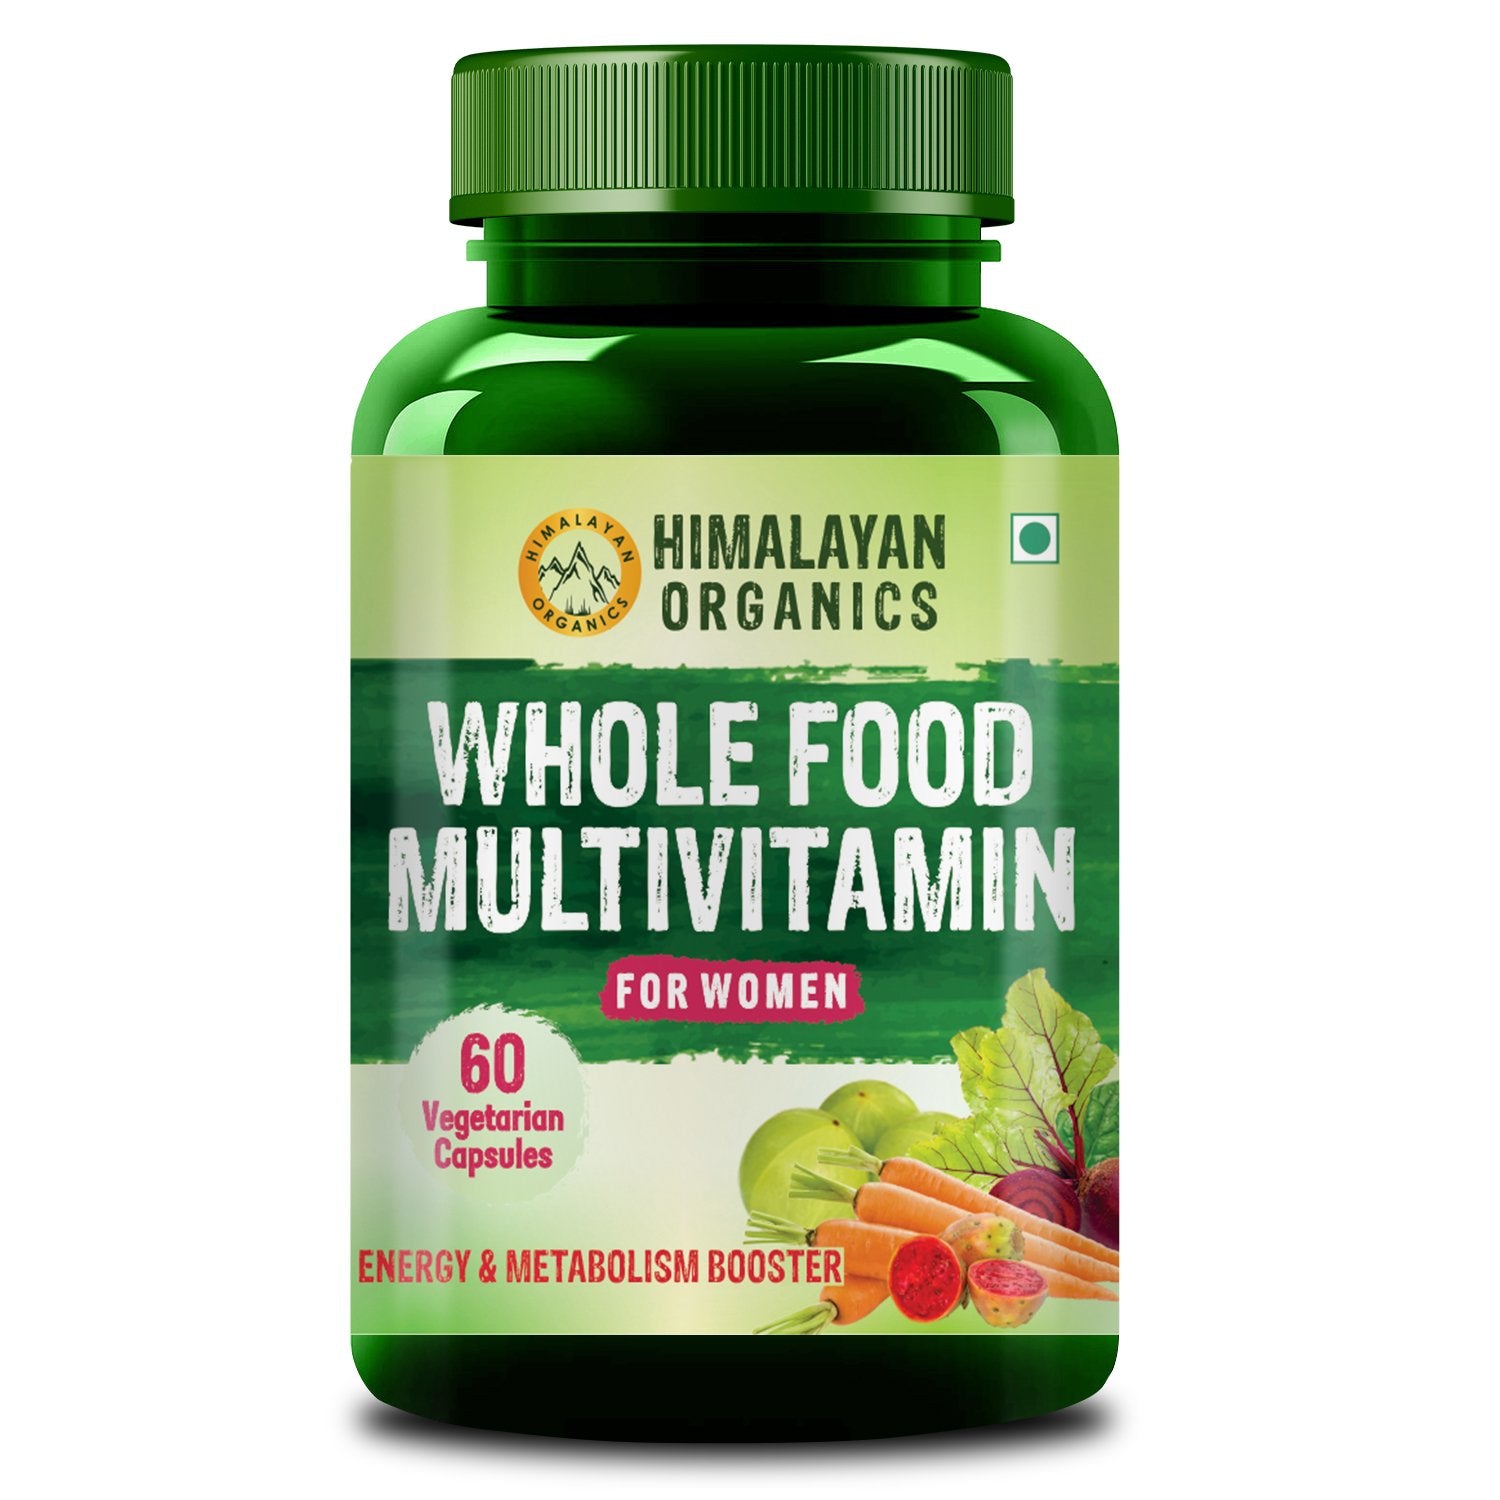 Himalayan Organics Whole Food Multivitamin For Women | 60 Veg Capsules